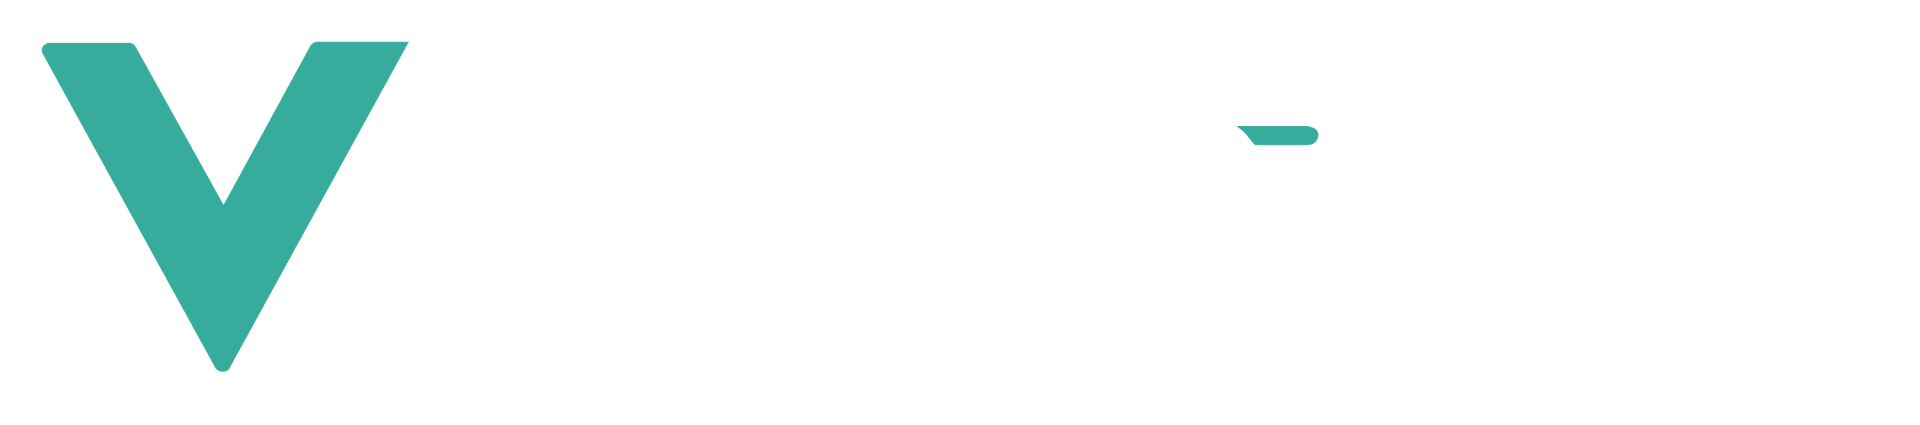 VirtualResource logo